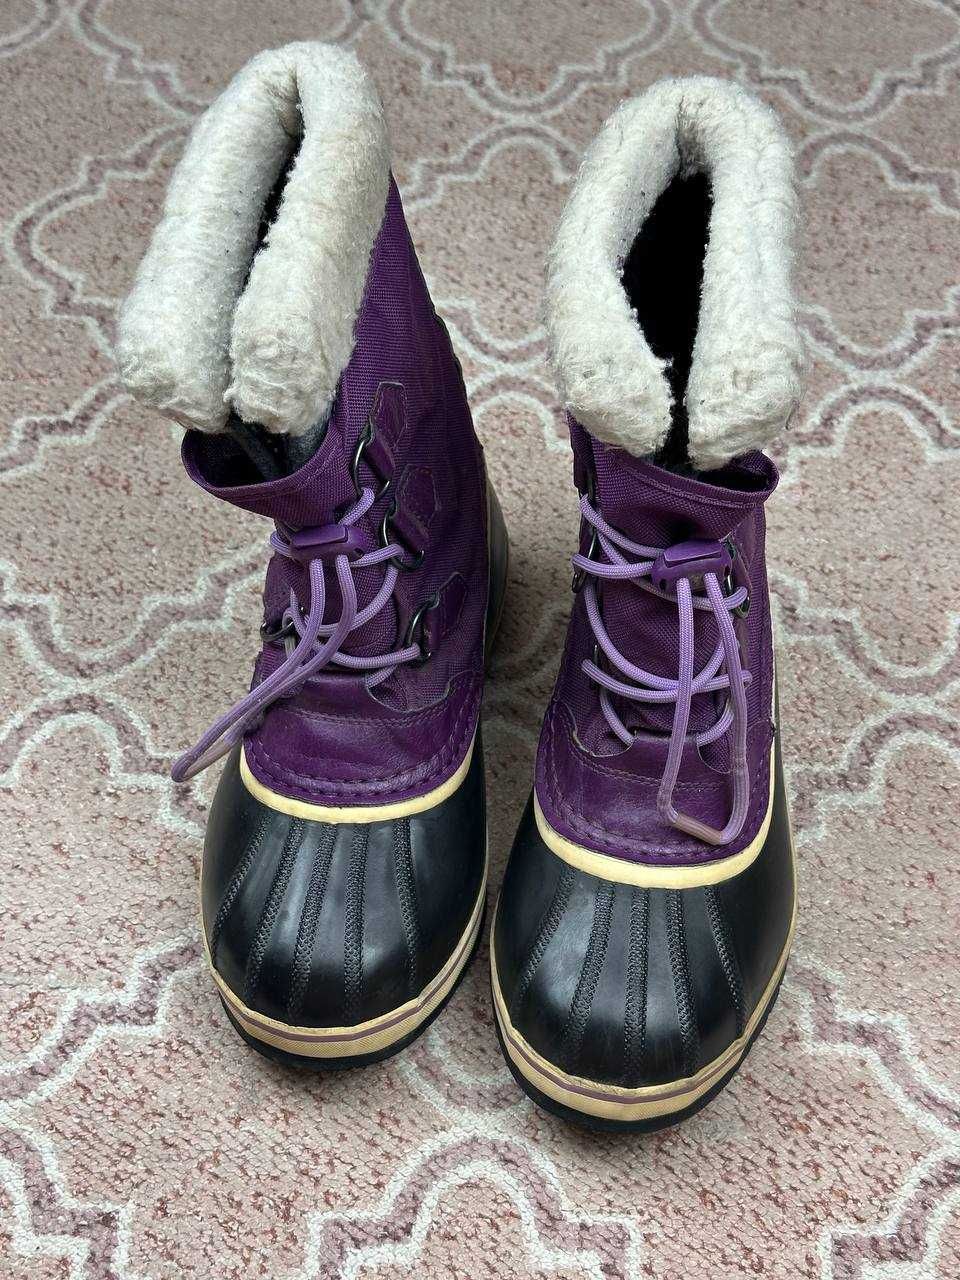 Sorel nylon waterproof faux fur śniegowce buty damskie zimowe gumowe